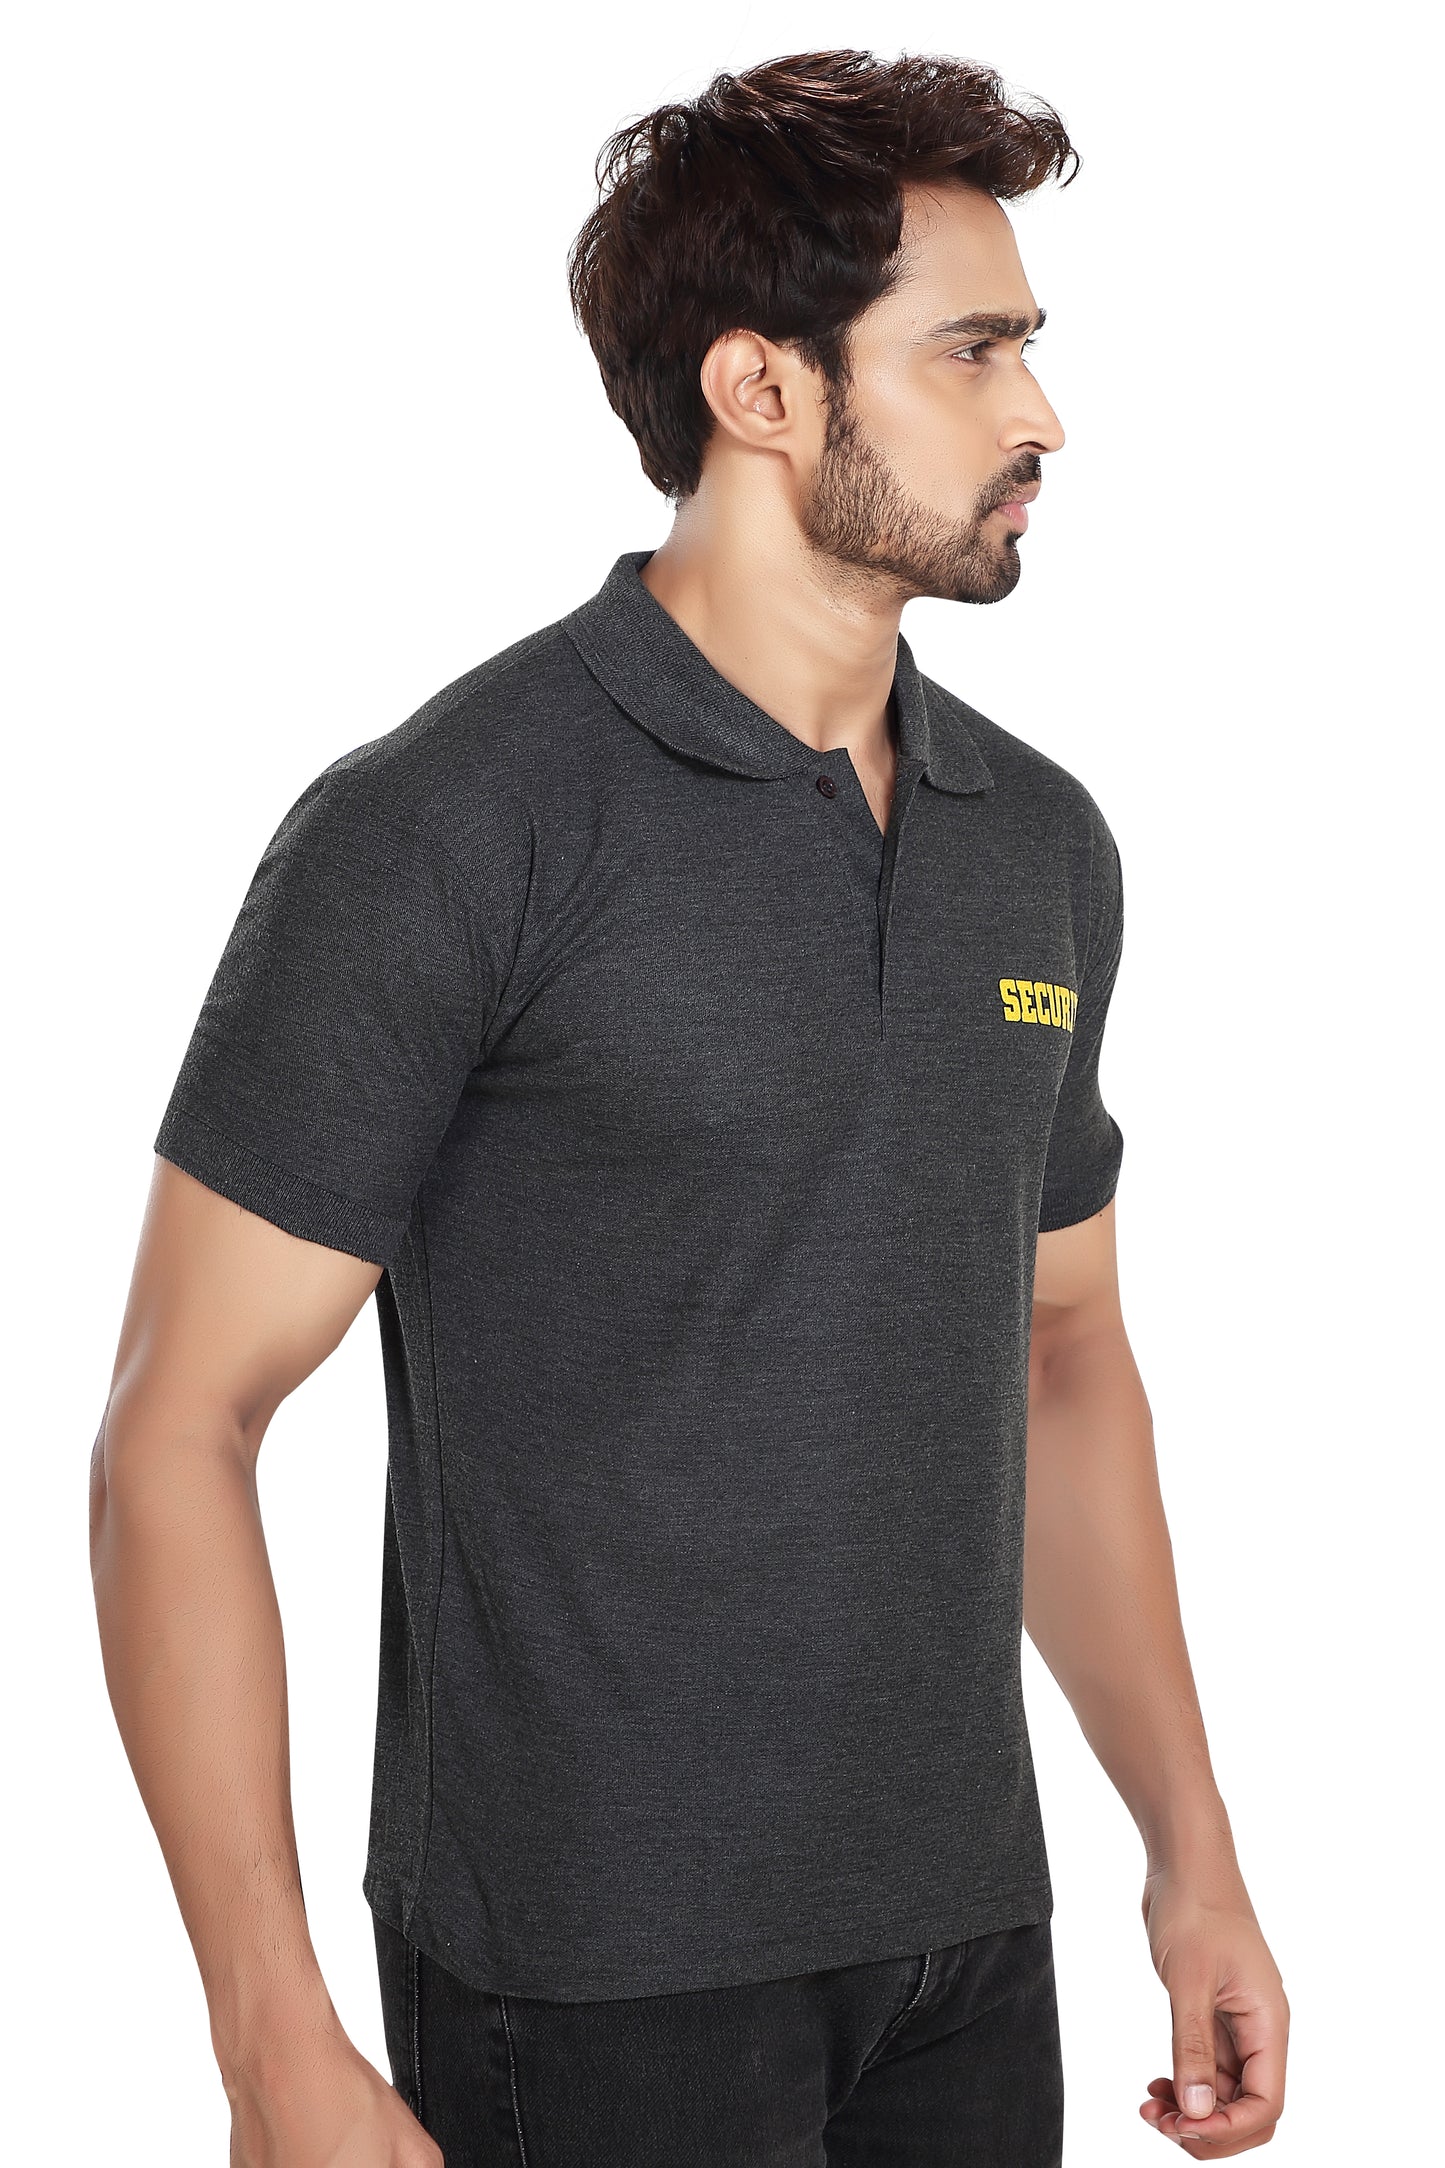 Security Guard 100% Cotton T-Shirt - Charcoal Millange